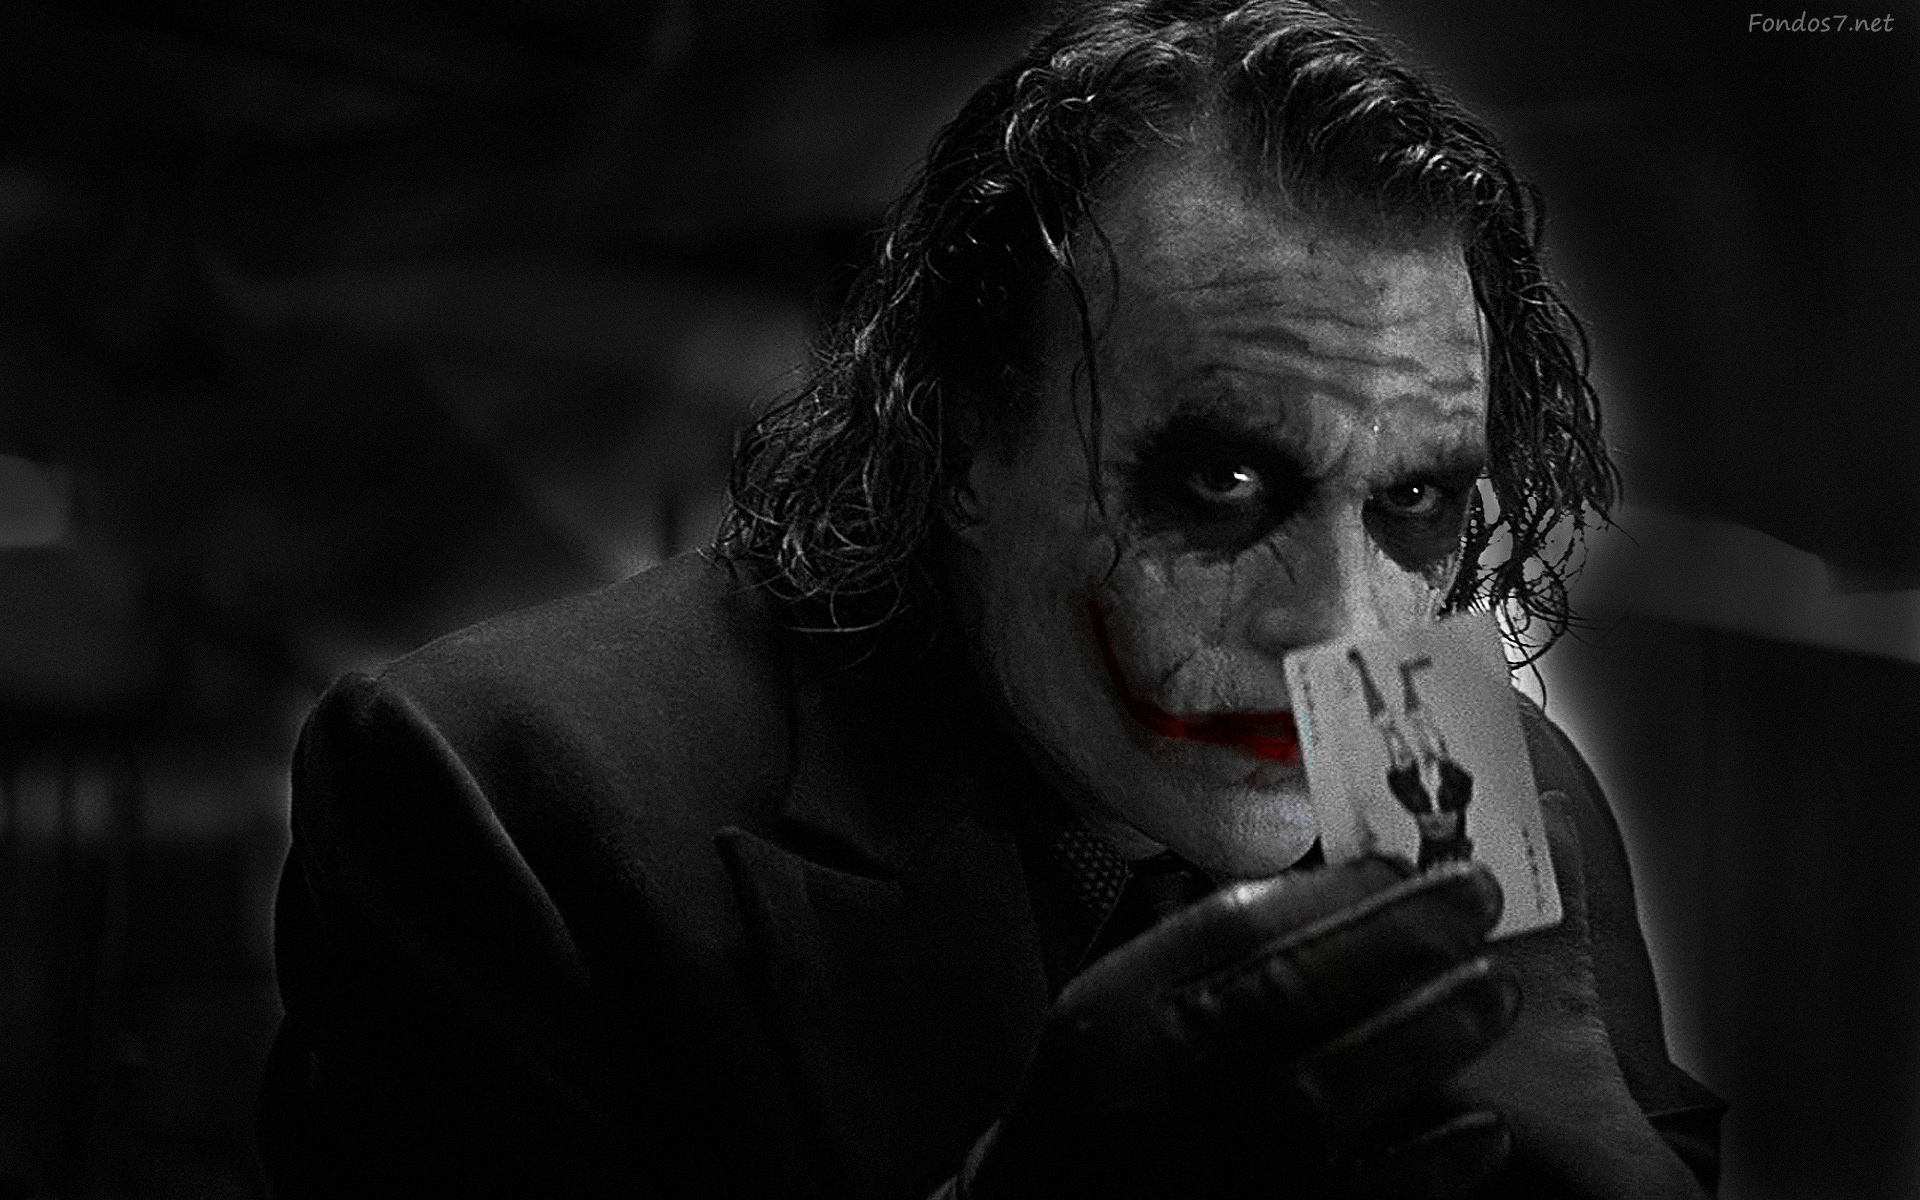 10. The Joker's blonde hair in the film "Batman: The Dark Knight" - wide 1